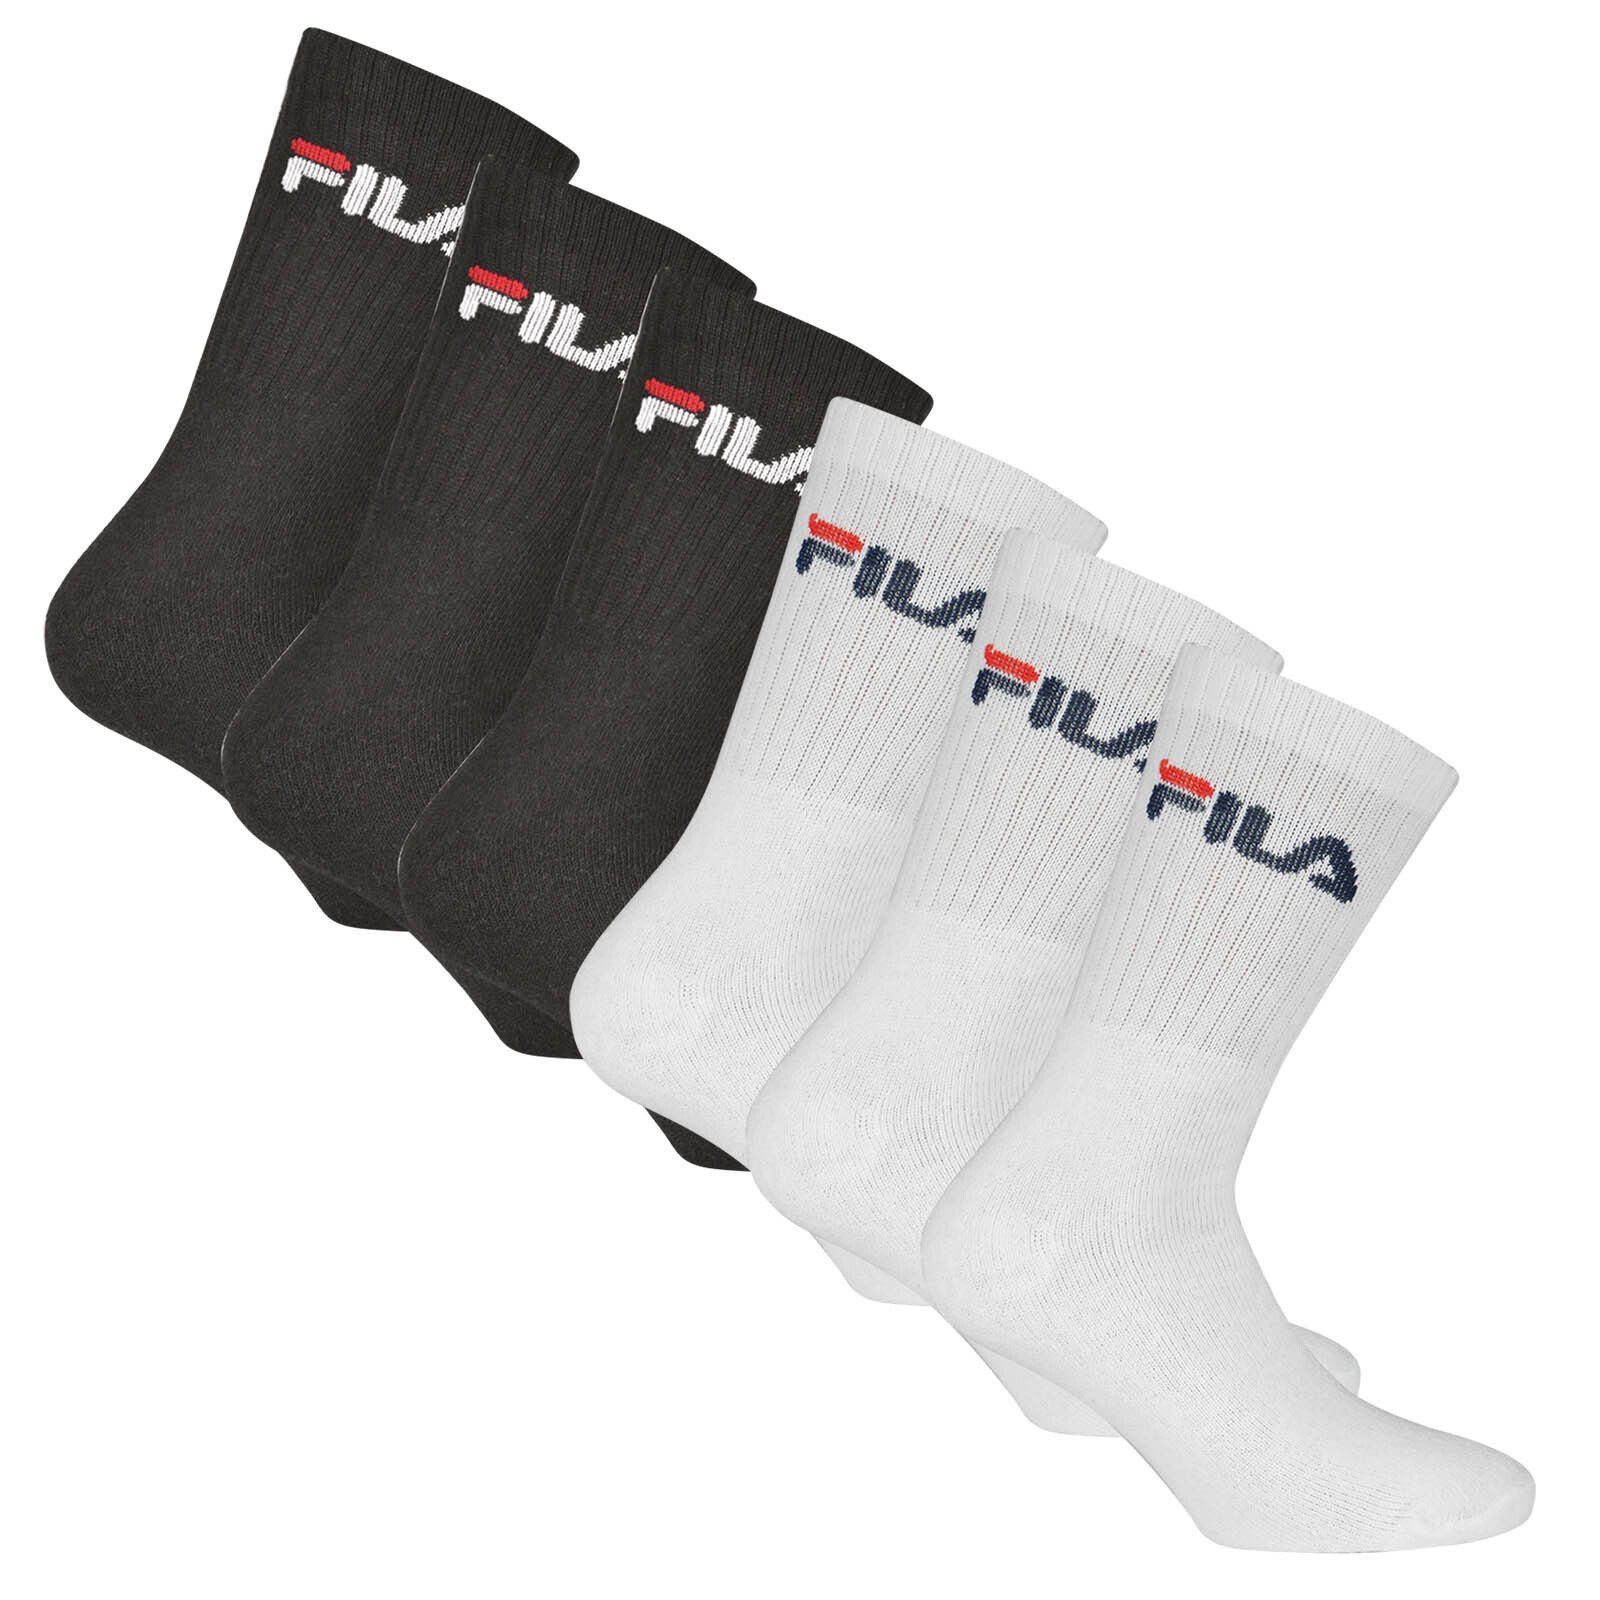 Fila Sportsocken Unisex Socken, 6er Pack - Crew Socks, Frottee Schwarz/Weiß